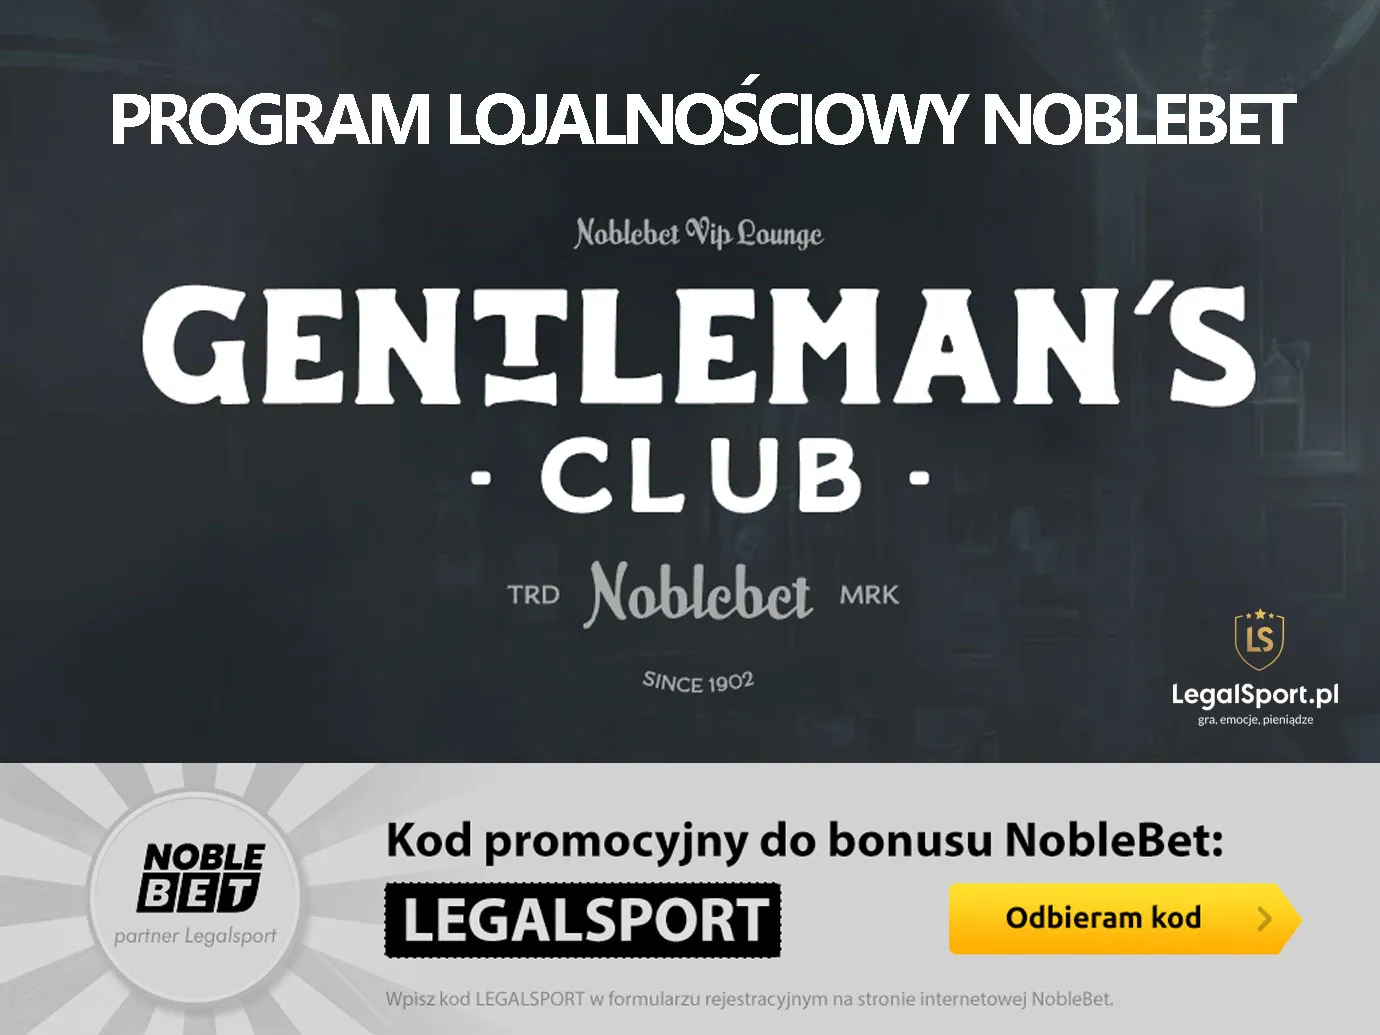 Gentleman's Club - program lojalnoÅ›ciowy Noblebet